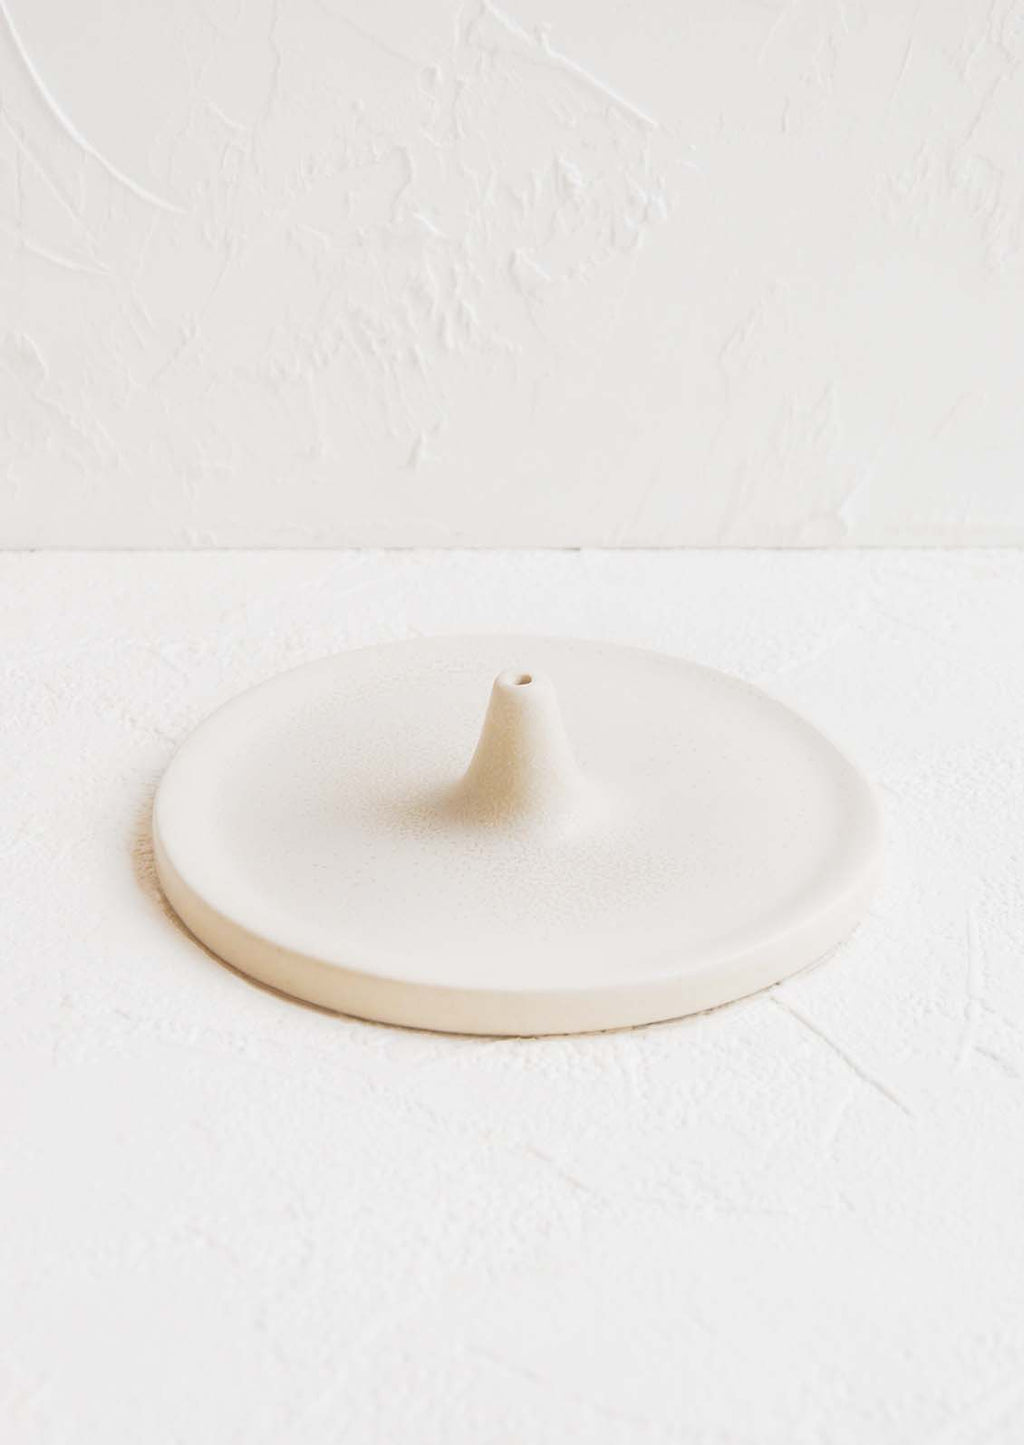 Bisque White: A circular ceramic incense holder in matte white.